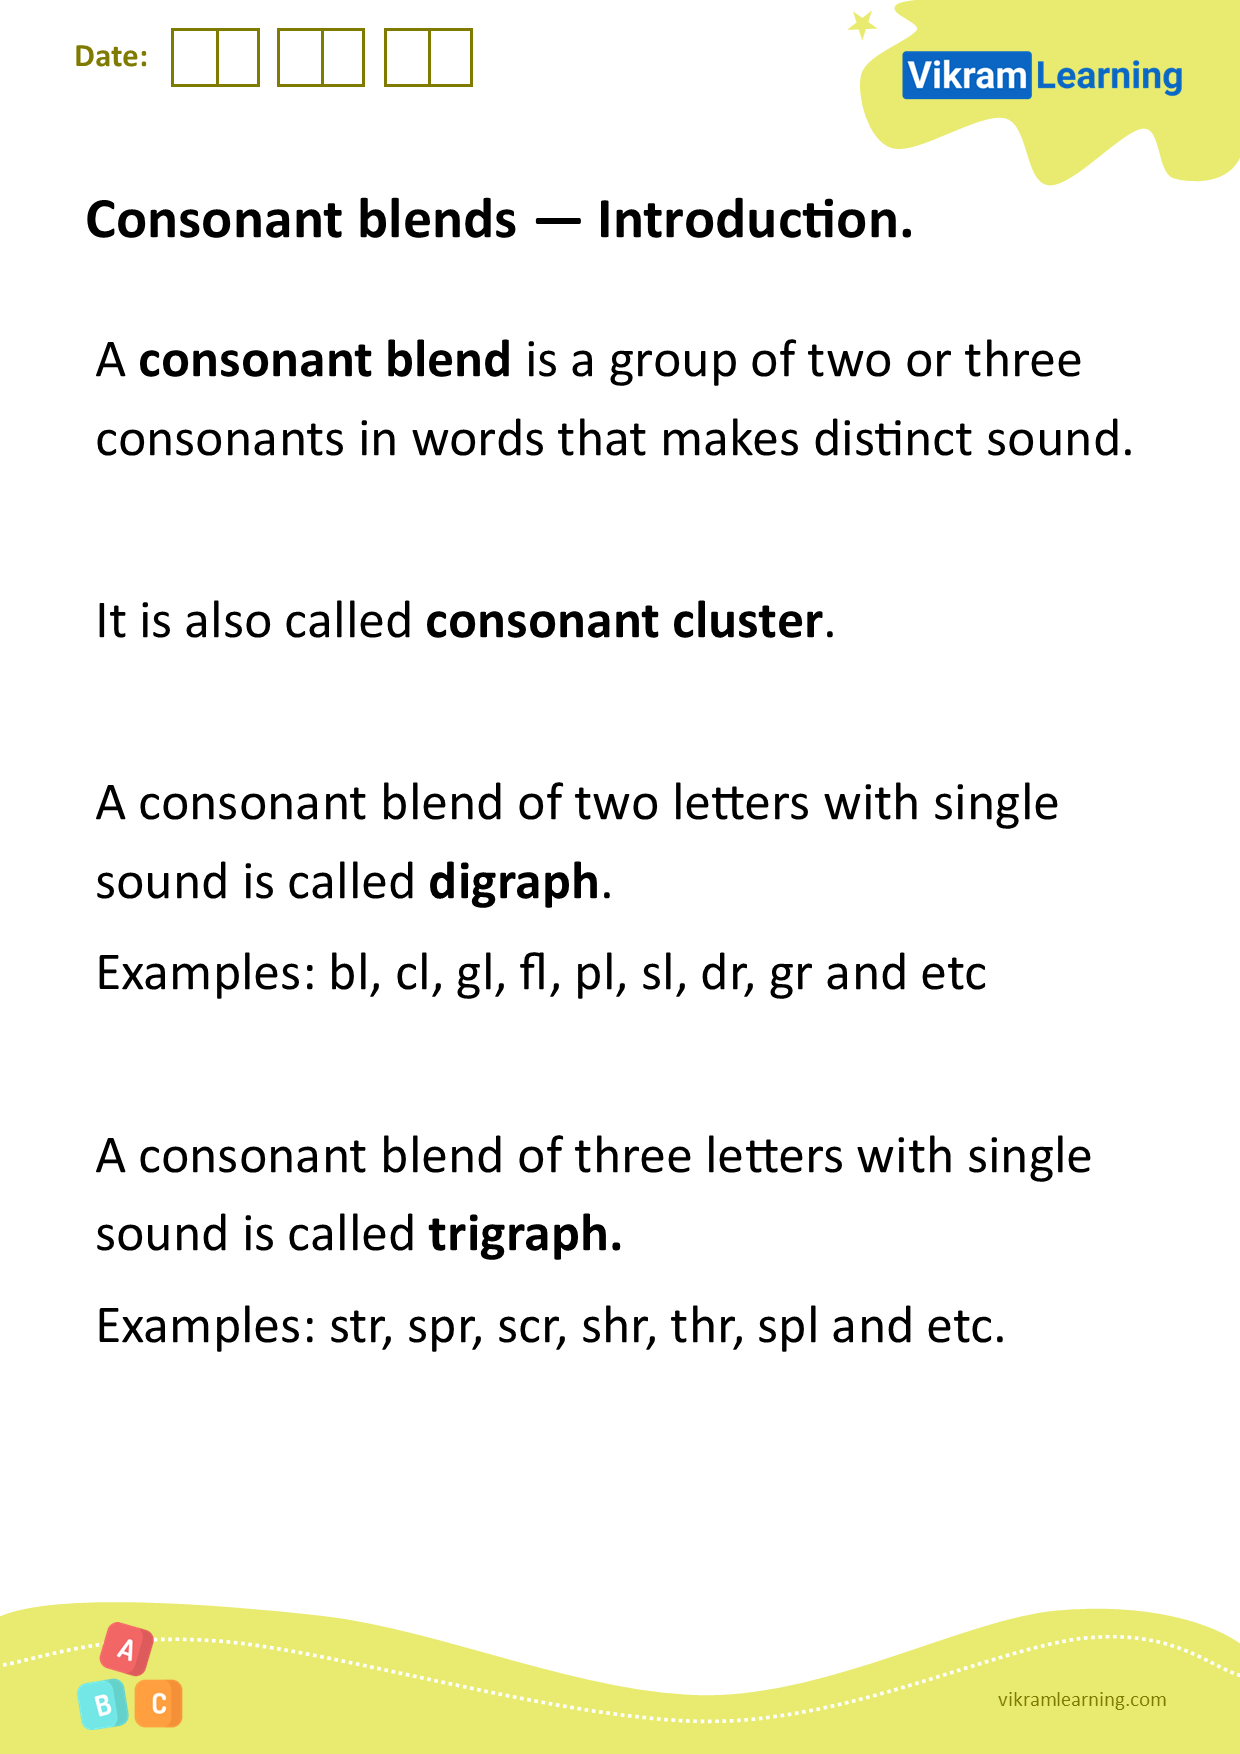 Download consonant blends — introduction worksheets